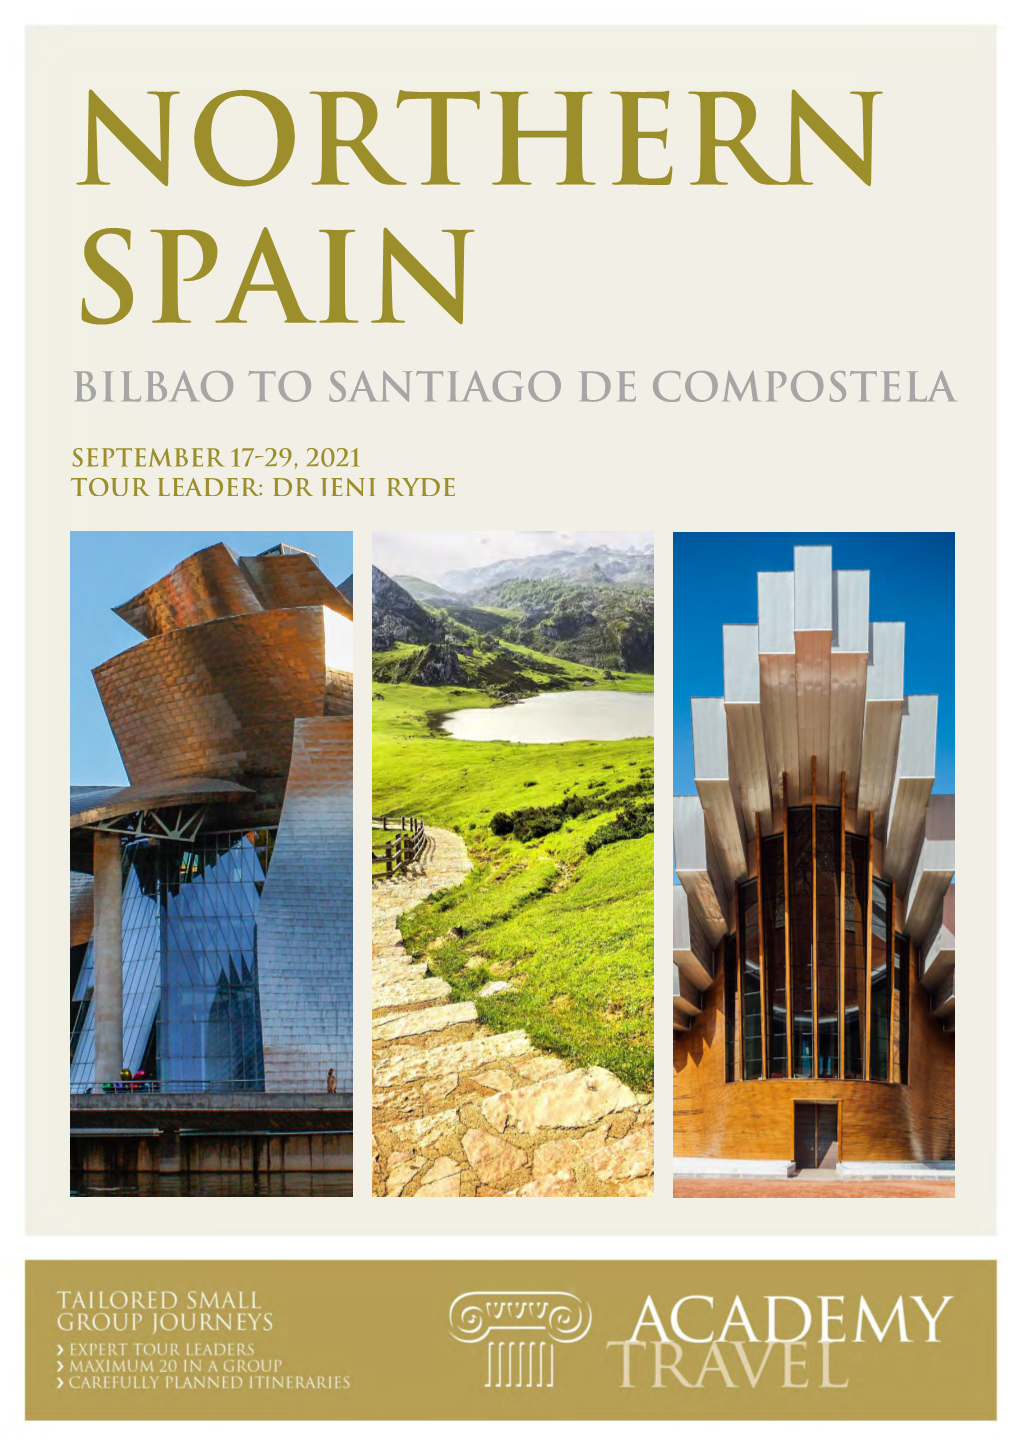 Itinerary: Bilbao (3 Nights), Burgos (2 Nights), Romanesque, Gothic and Baroque Architecture